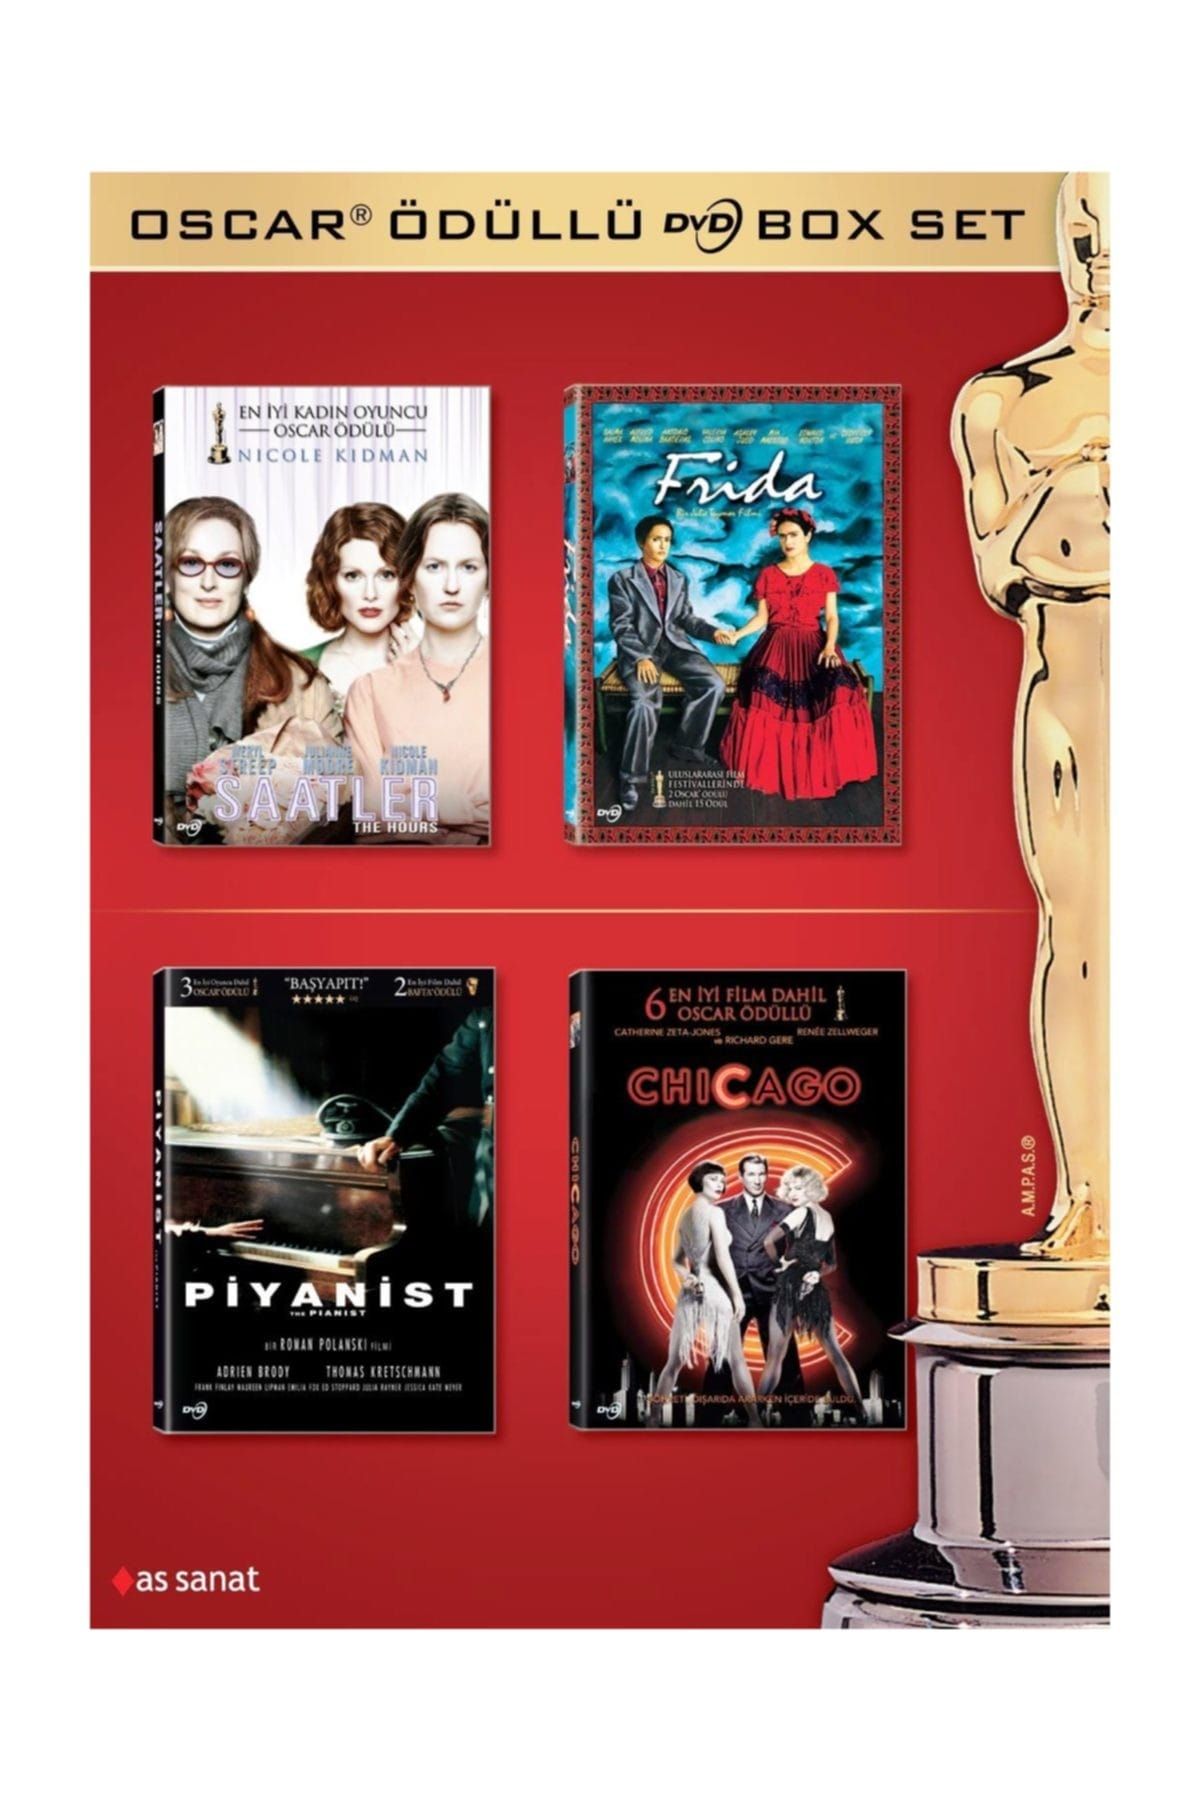 Pal DVD-Oscar Ödüllü 4 DVDBox Set